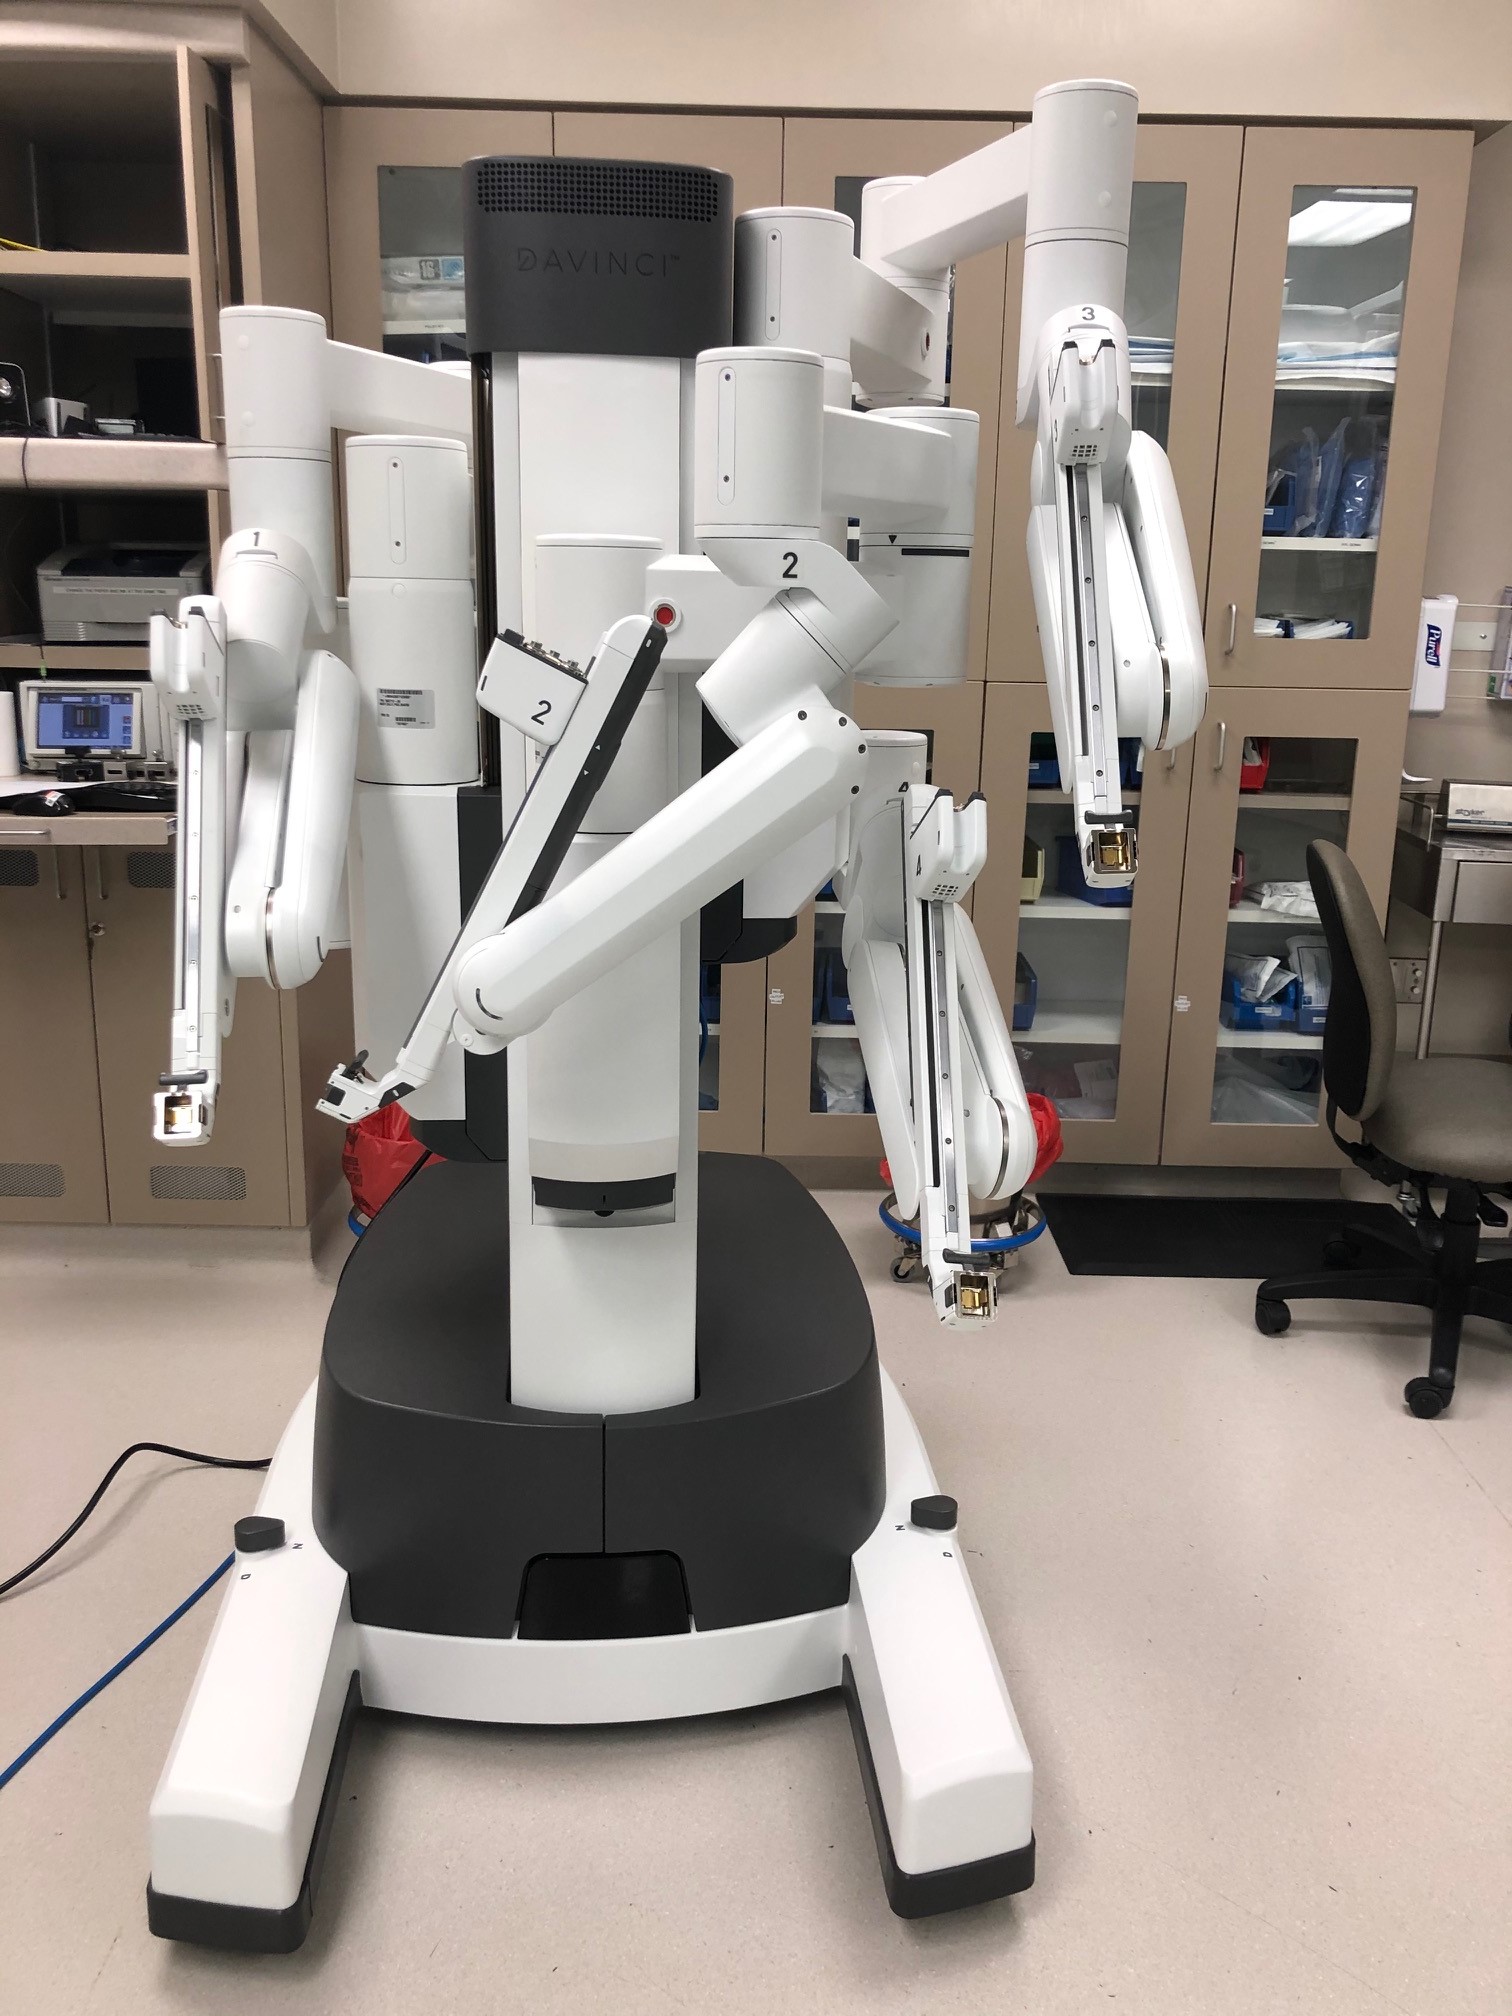 da Vinci X Robotic Surgery System